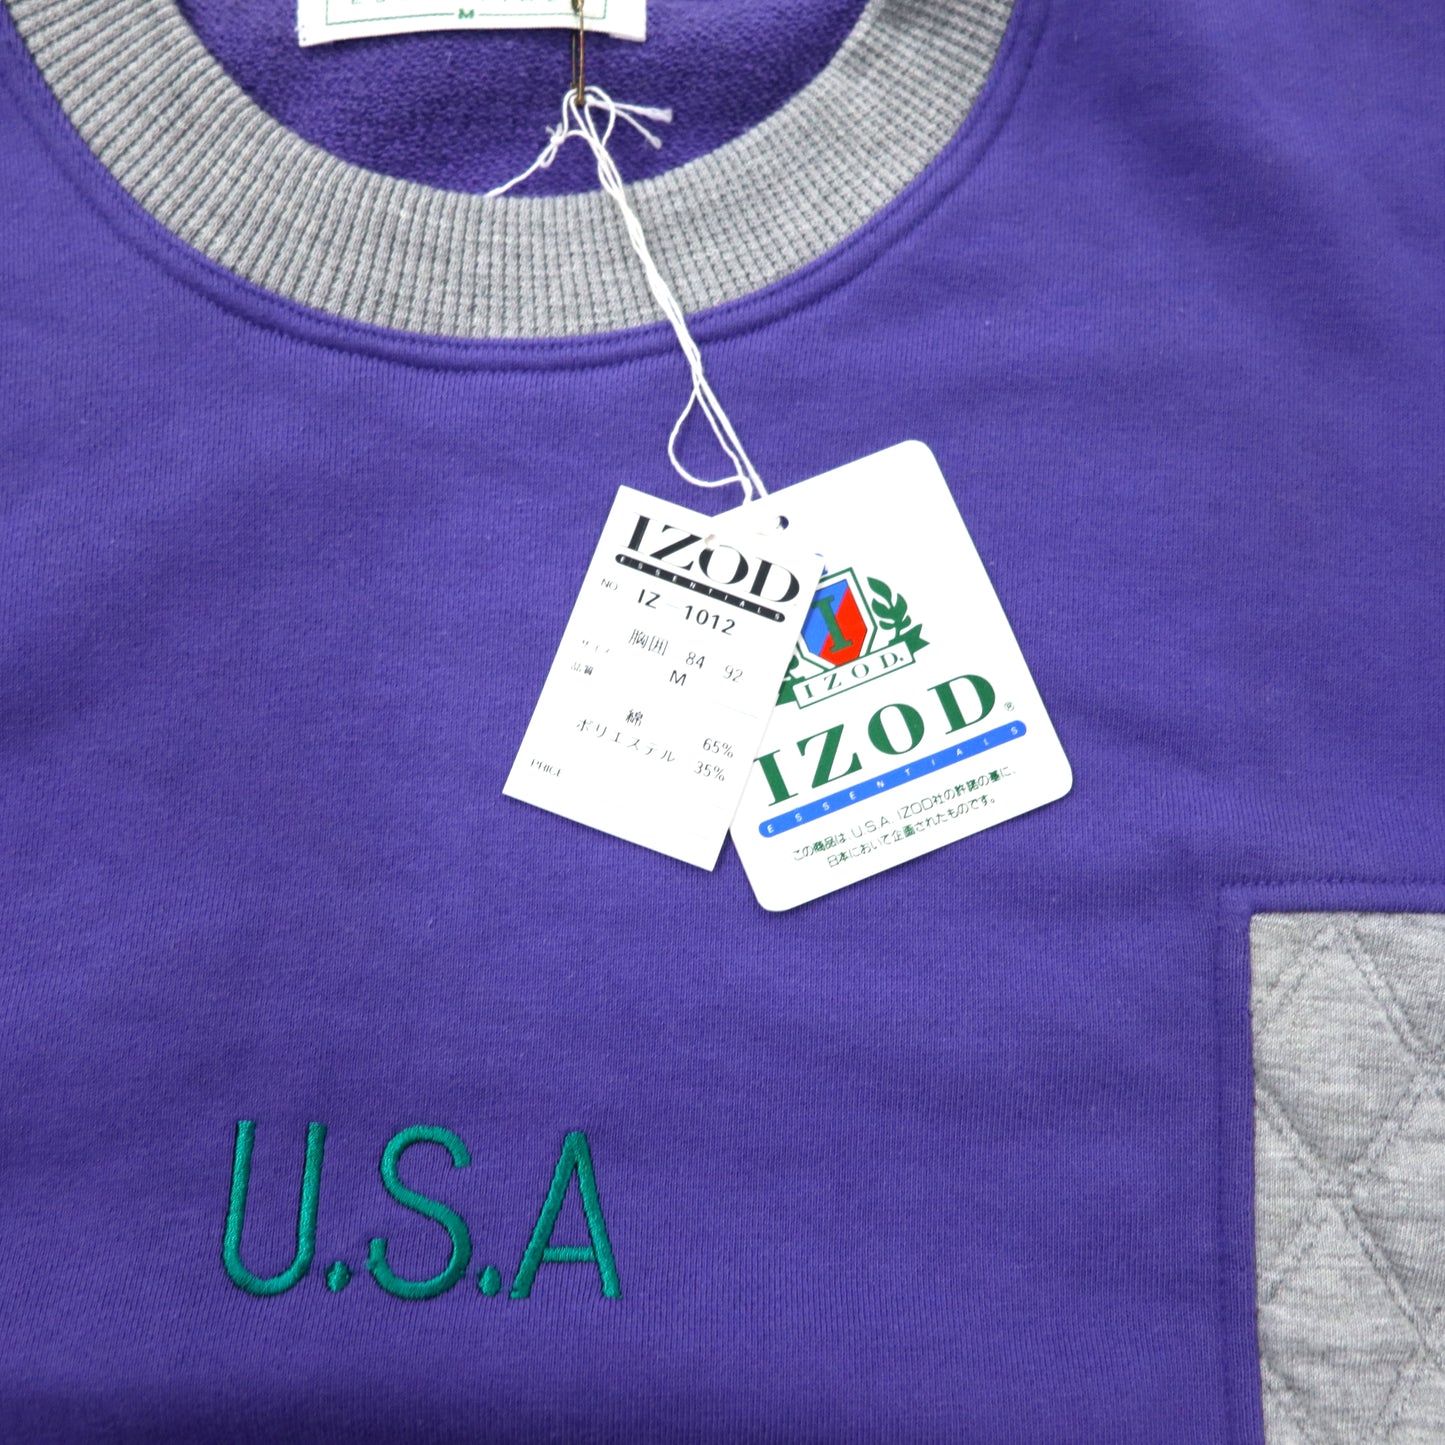 IZOD 90年代 クルーネックスウェット M パープル グレー コットン U.S.A刺繍 袖ロゴ刺繍 日本製 未使用品